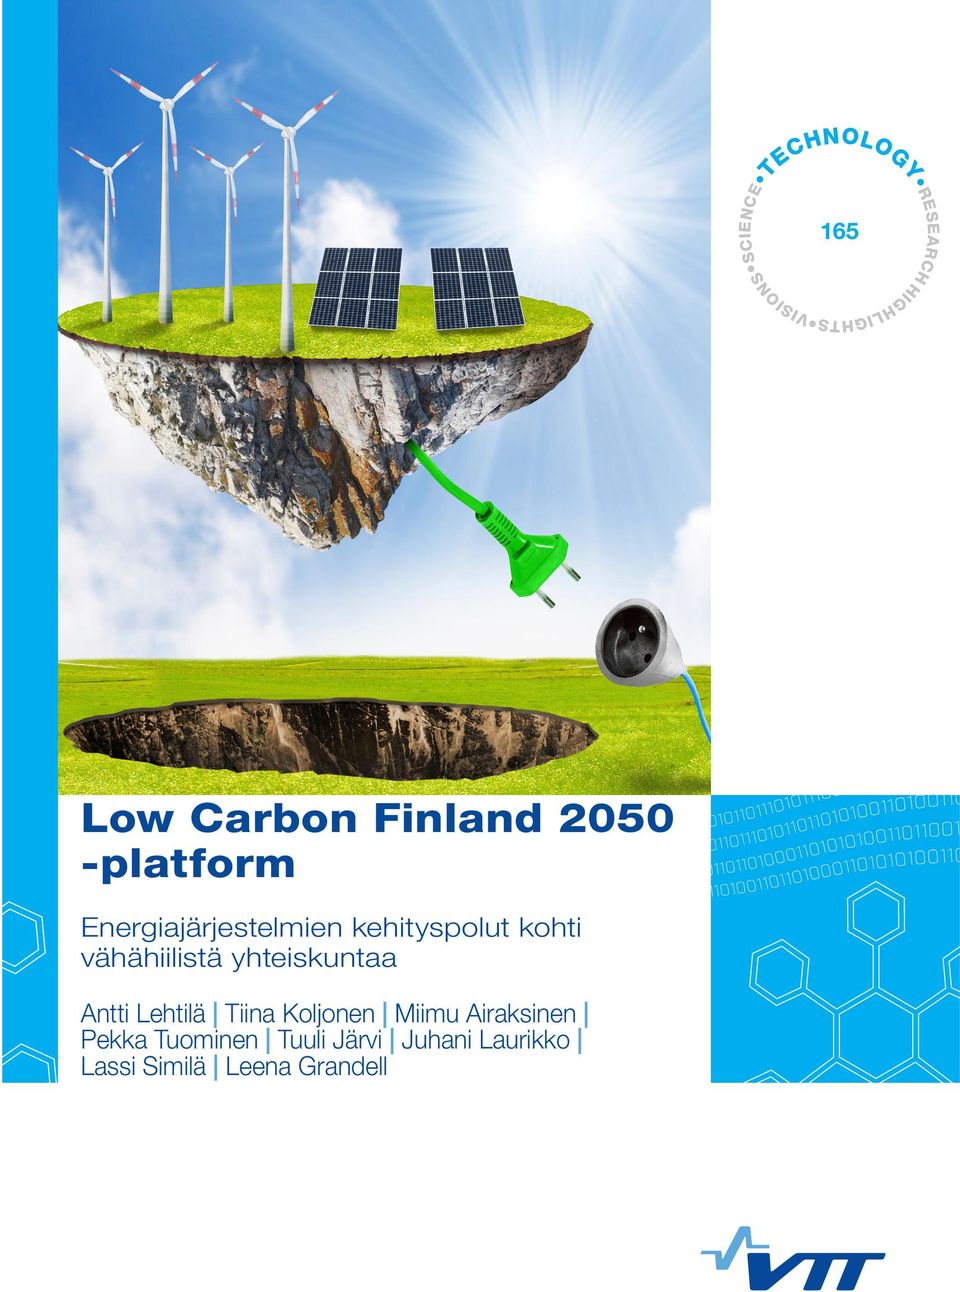 Low Carbon Finland 2050 -platform ISBN 978-951-38-7439-1 (URL: http://www.vtt.fi/publications/index.